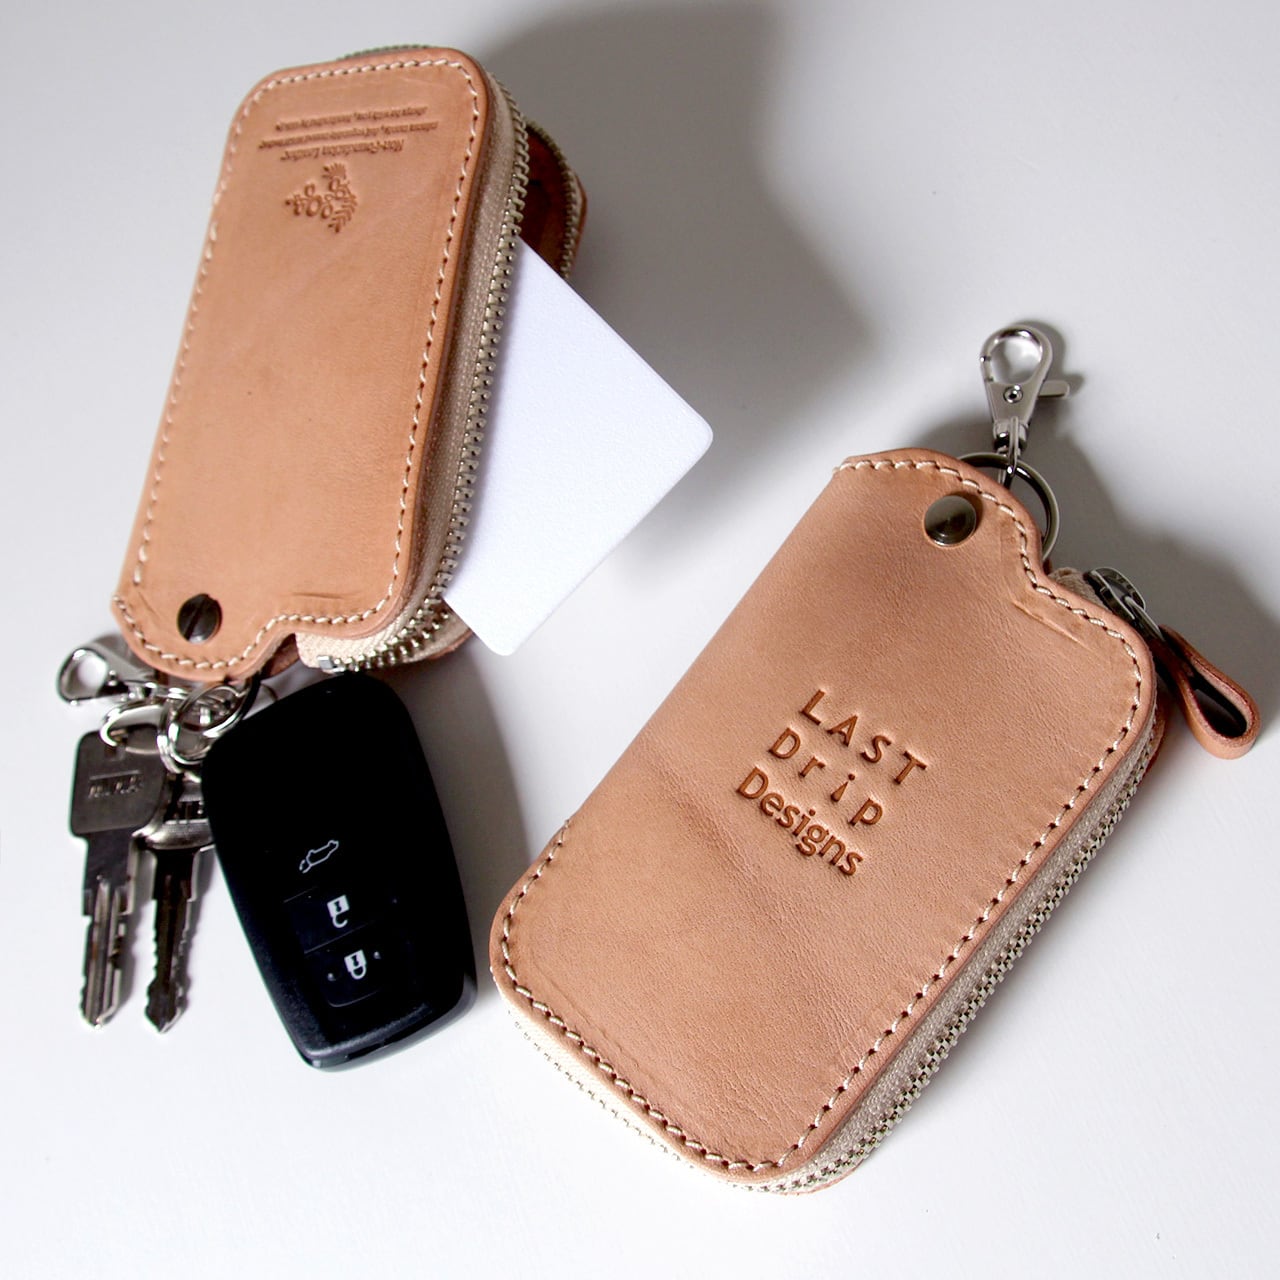 The Row Zipped Keychain カードケース 財布 キーケース